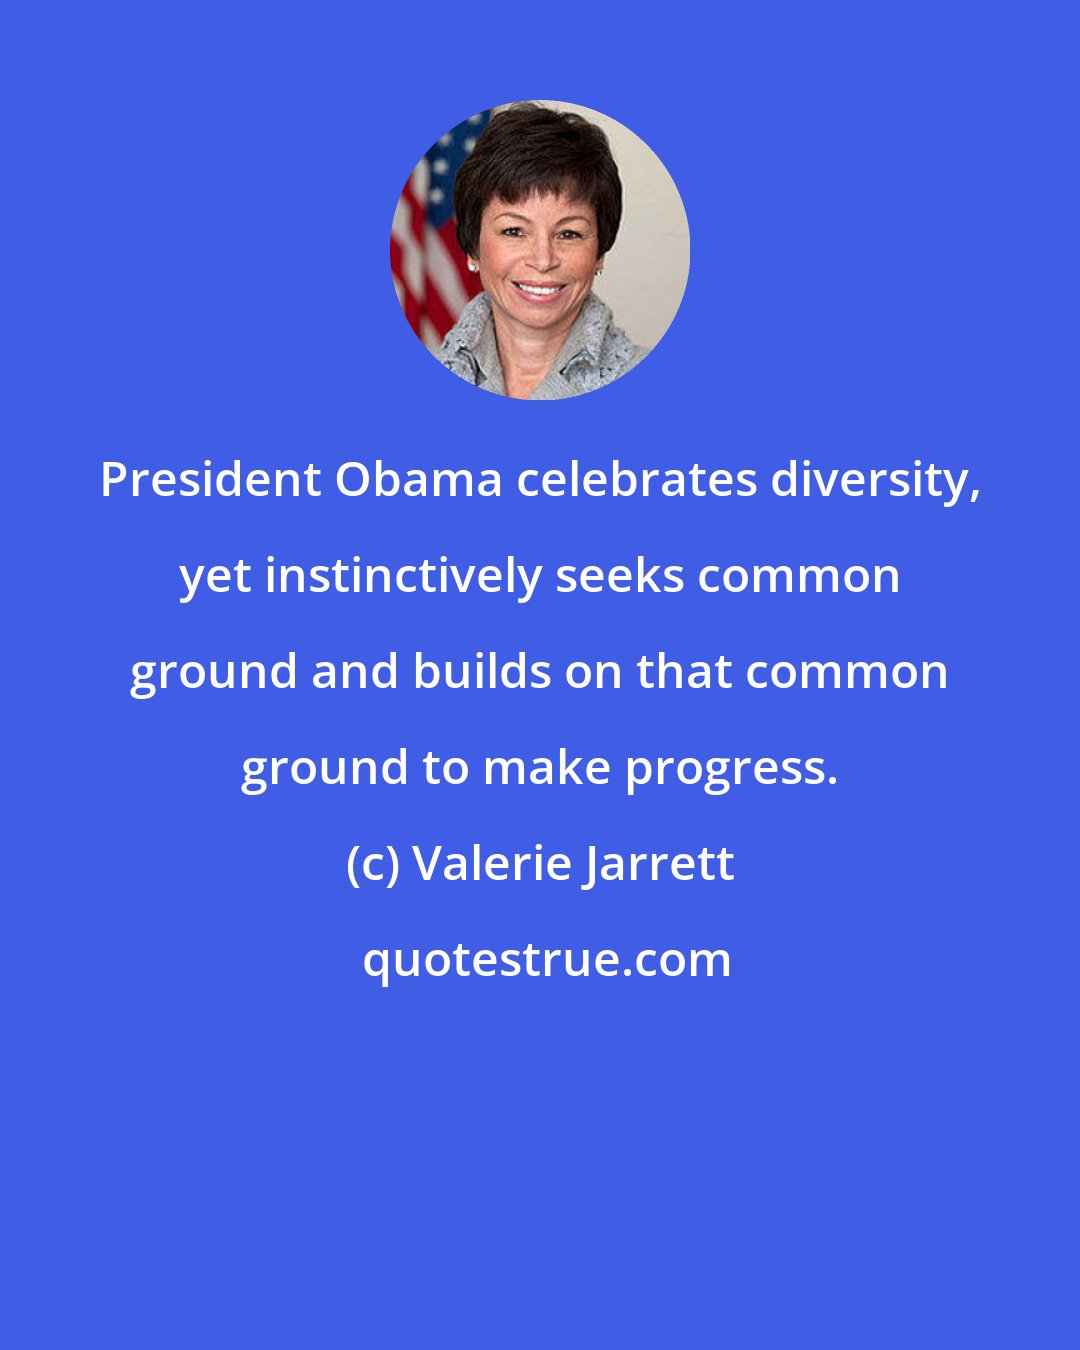 Valerie Jarrett: President Obama celebrates diversity, yet instinctively seeks common ground and builds on that common ground to make progress.